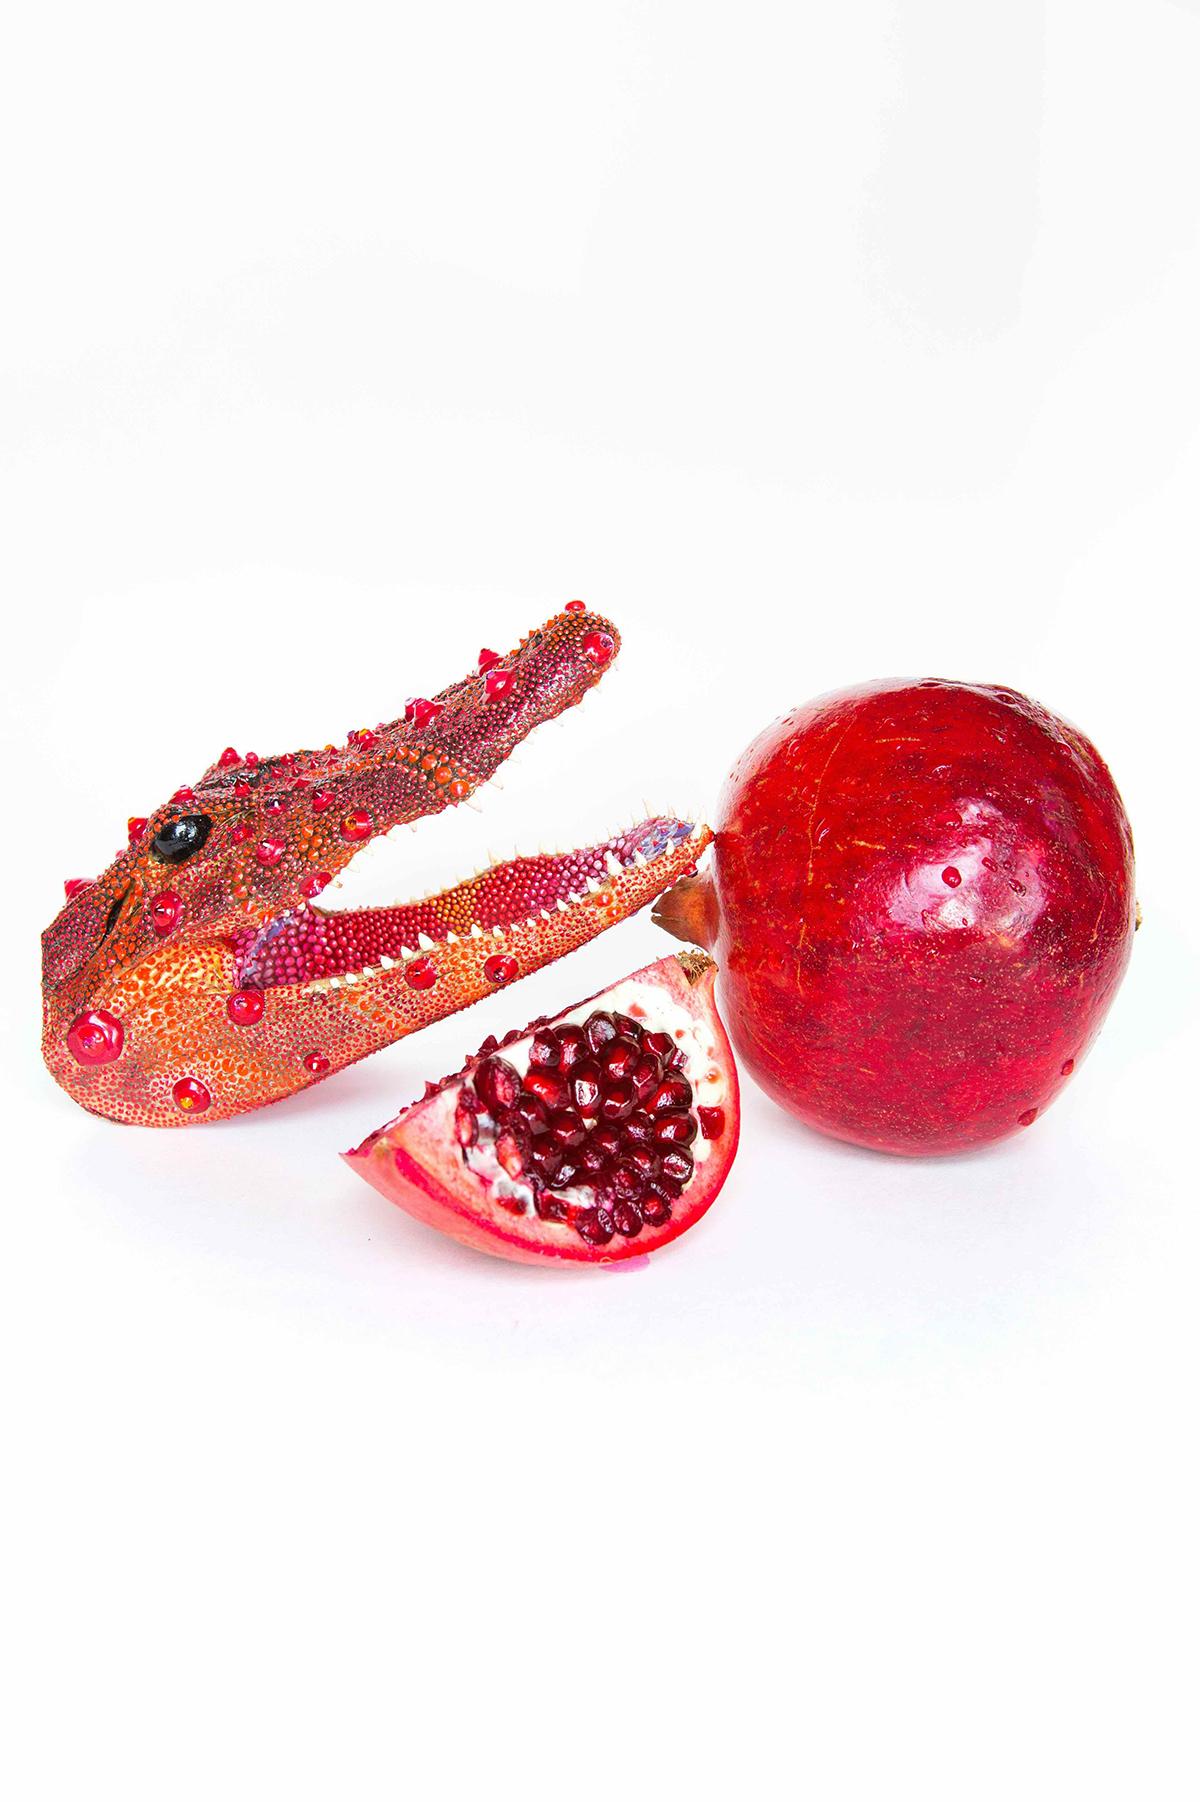 Pomegranate Gator - Sculpture by PJ Linden